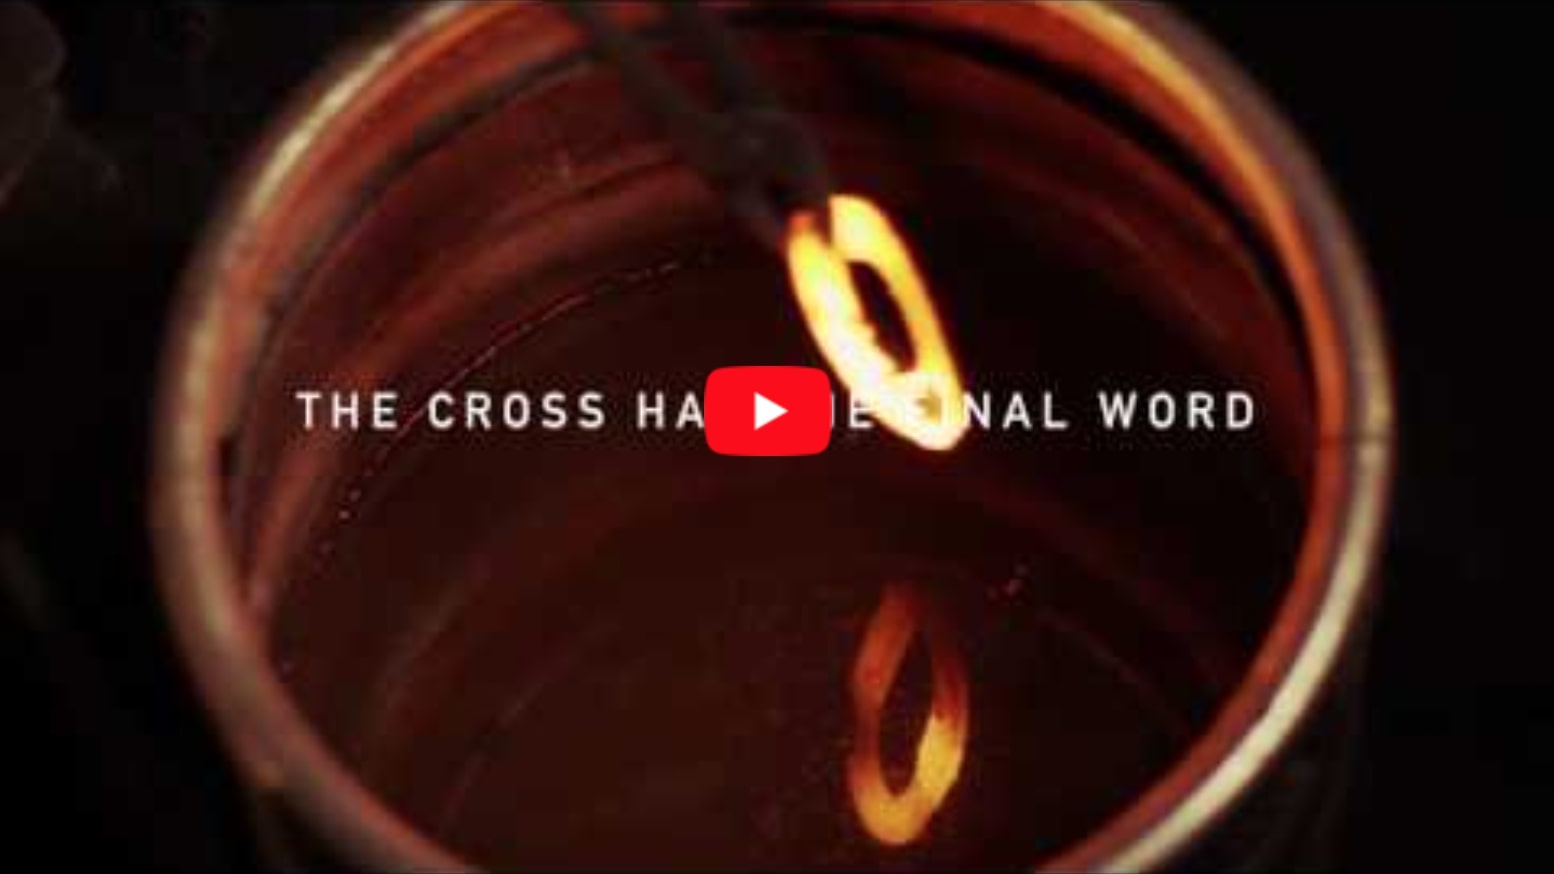 newsboys - the cross has the final word